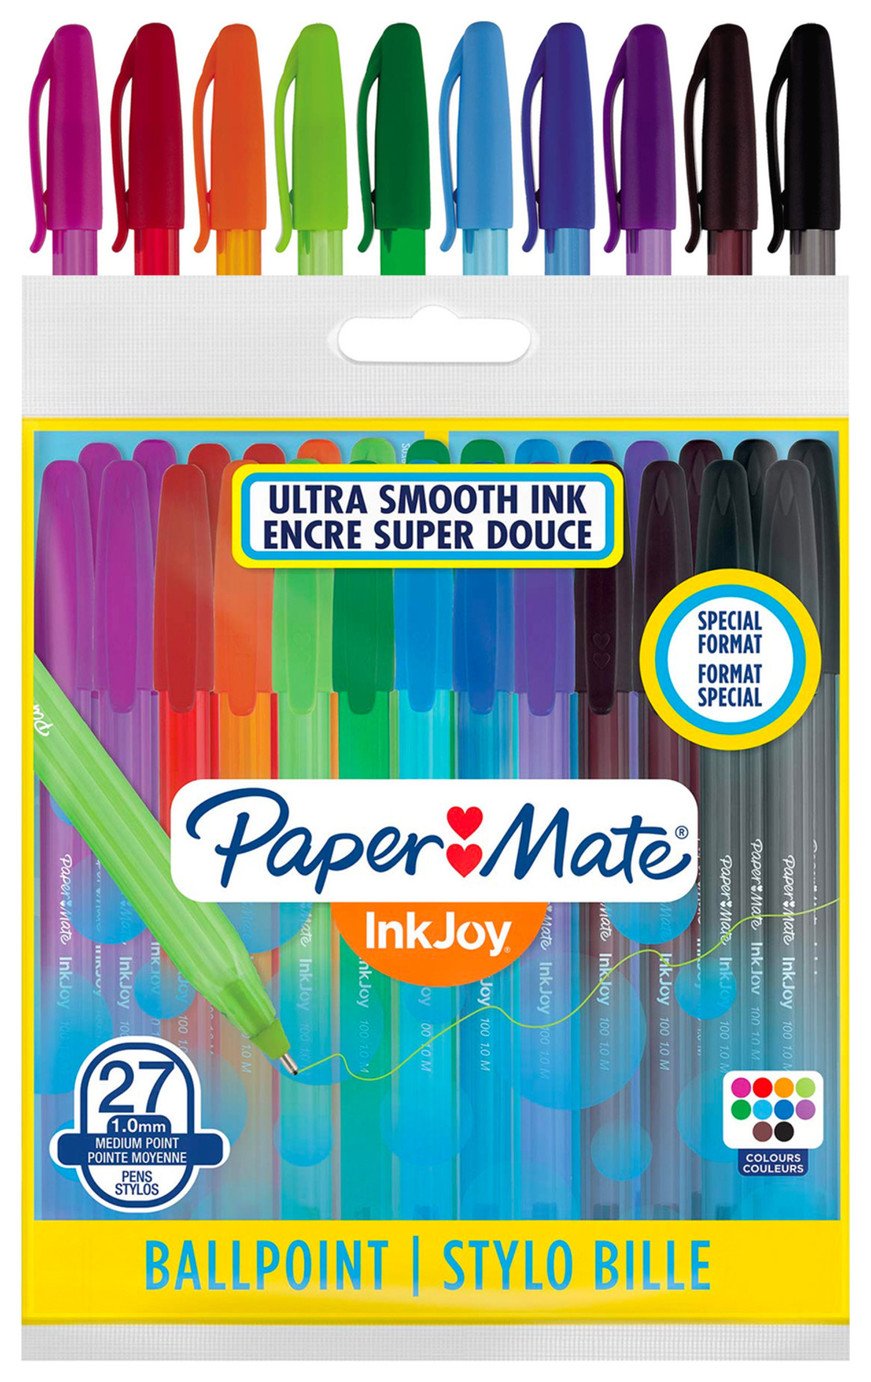 Paper Mate Pack of 27 Ink Joy Ballpoint Pens - Multicolour